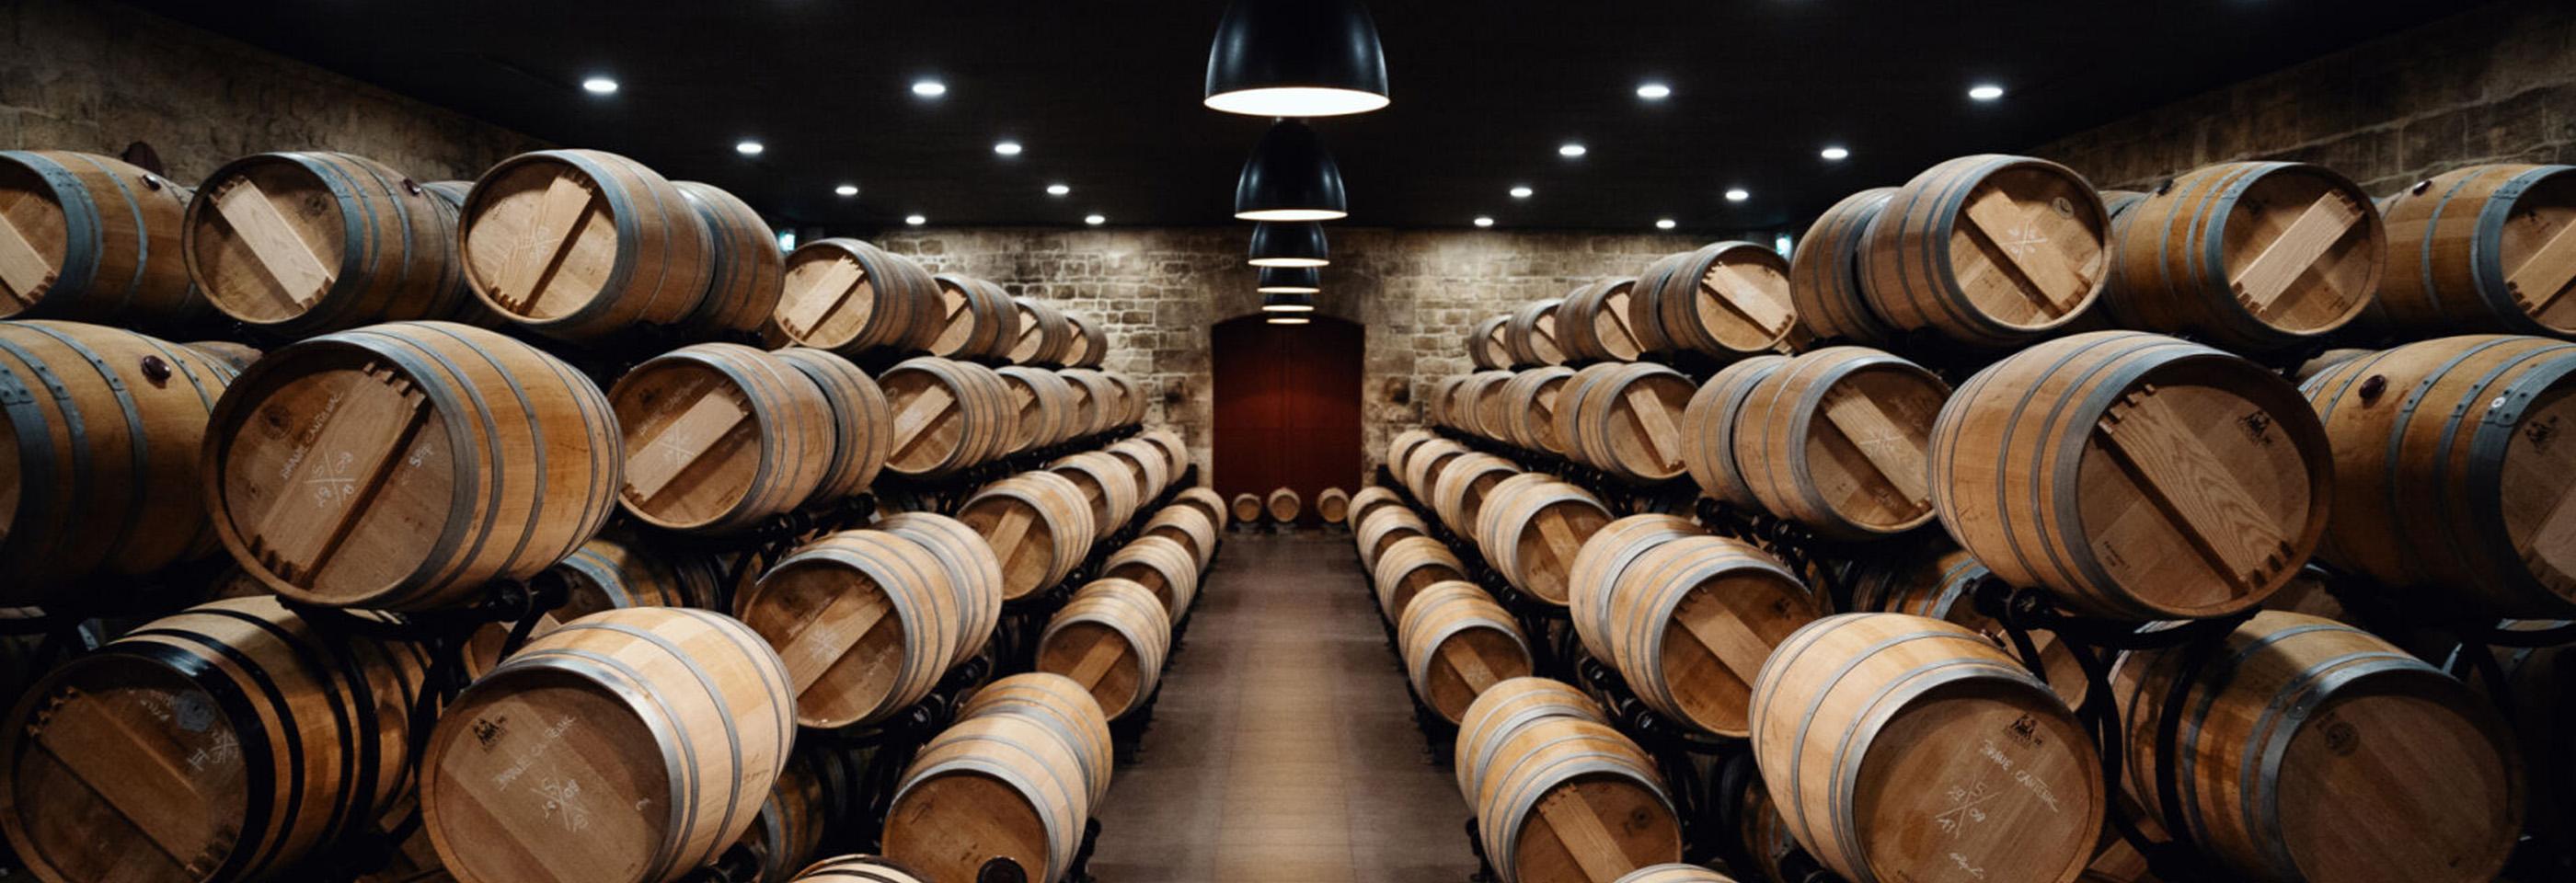 Room full of wine barrells